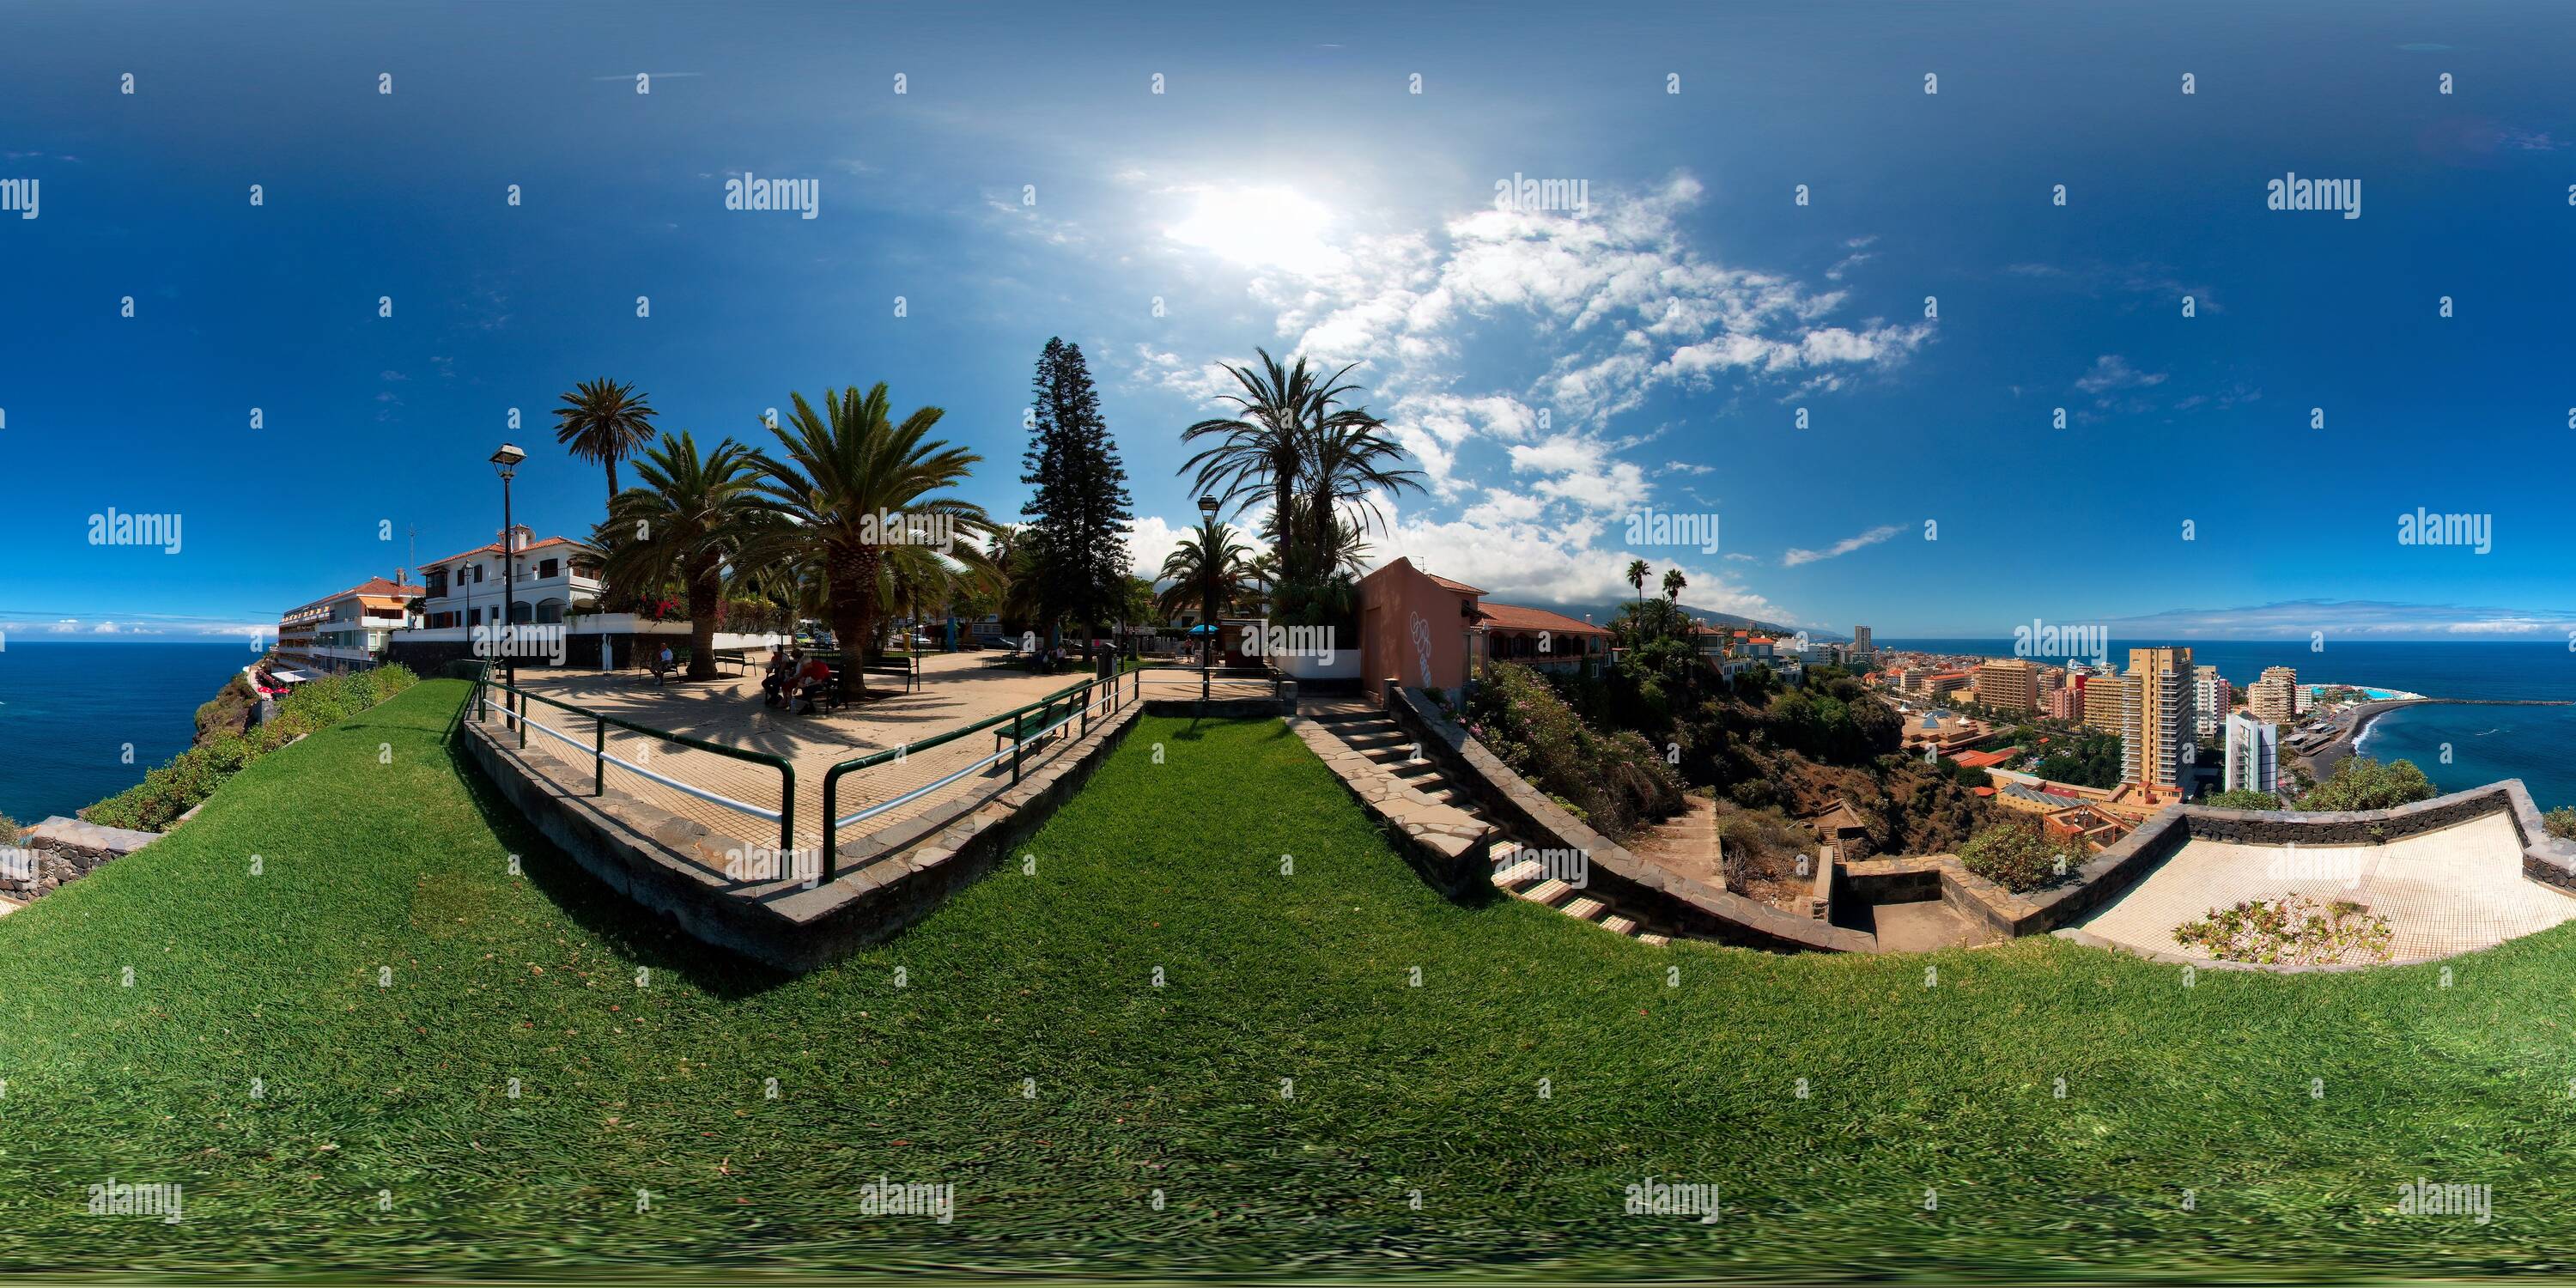 360 degree panoramic view of Mirador La Paz Tenerife